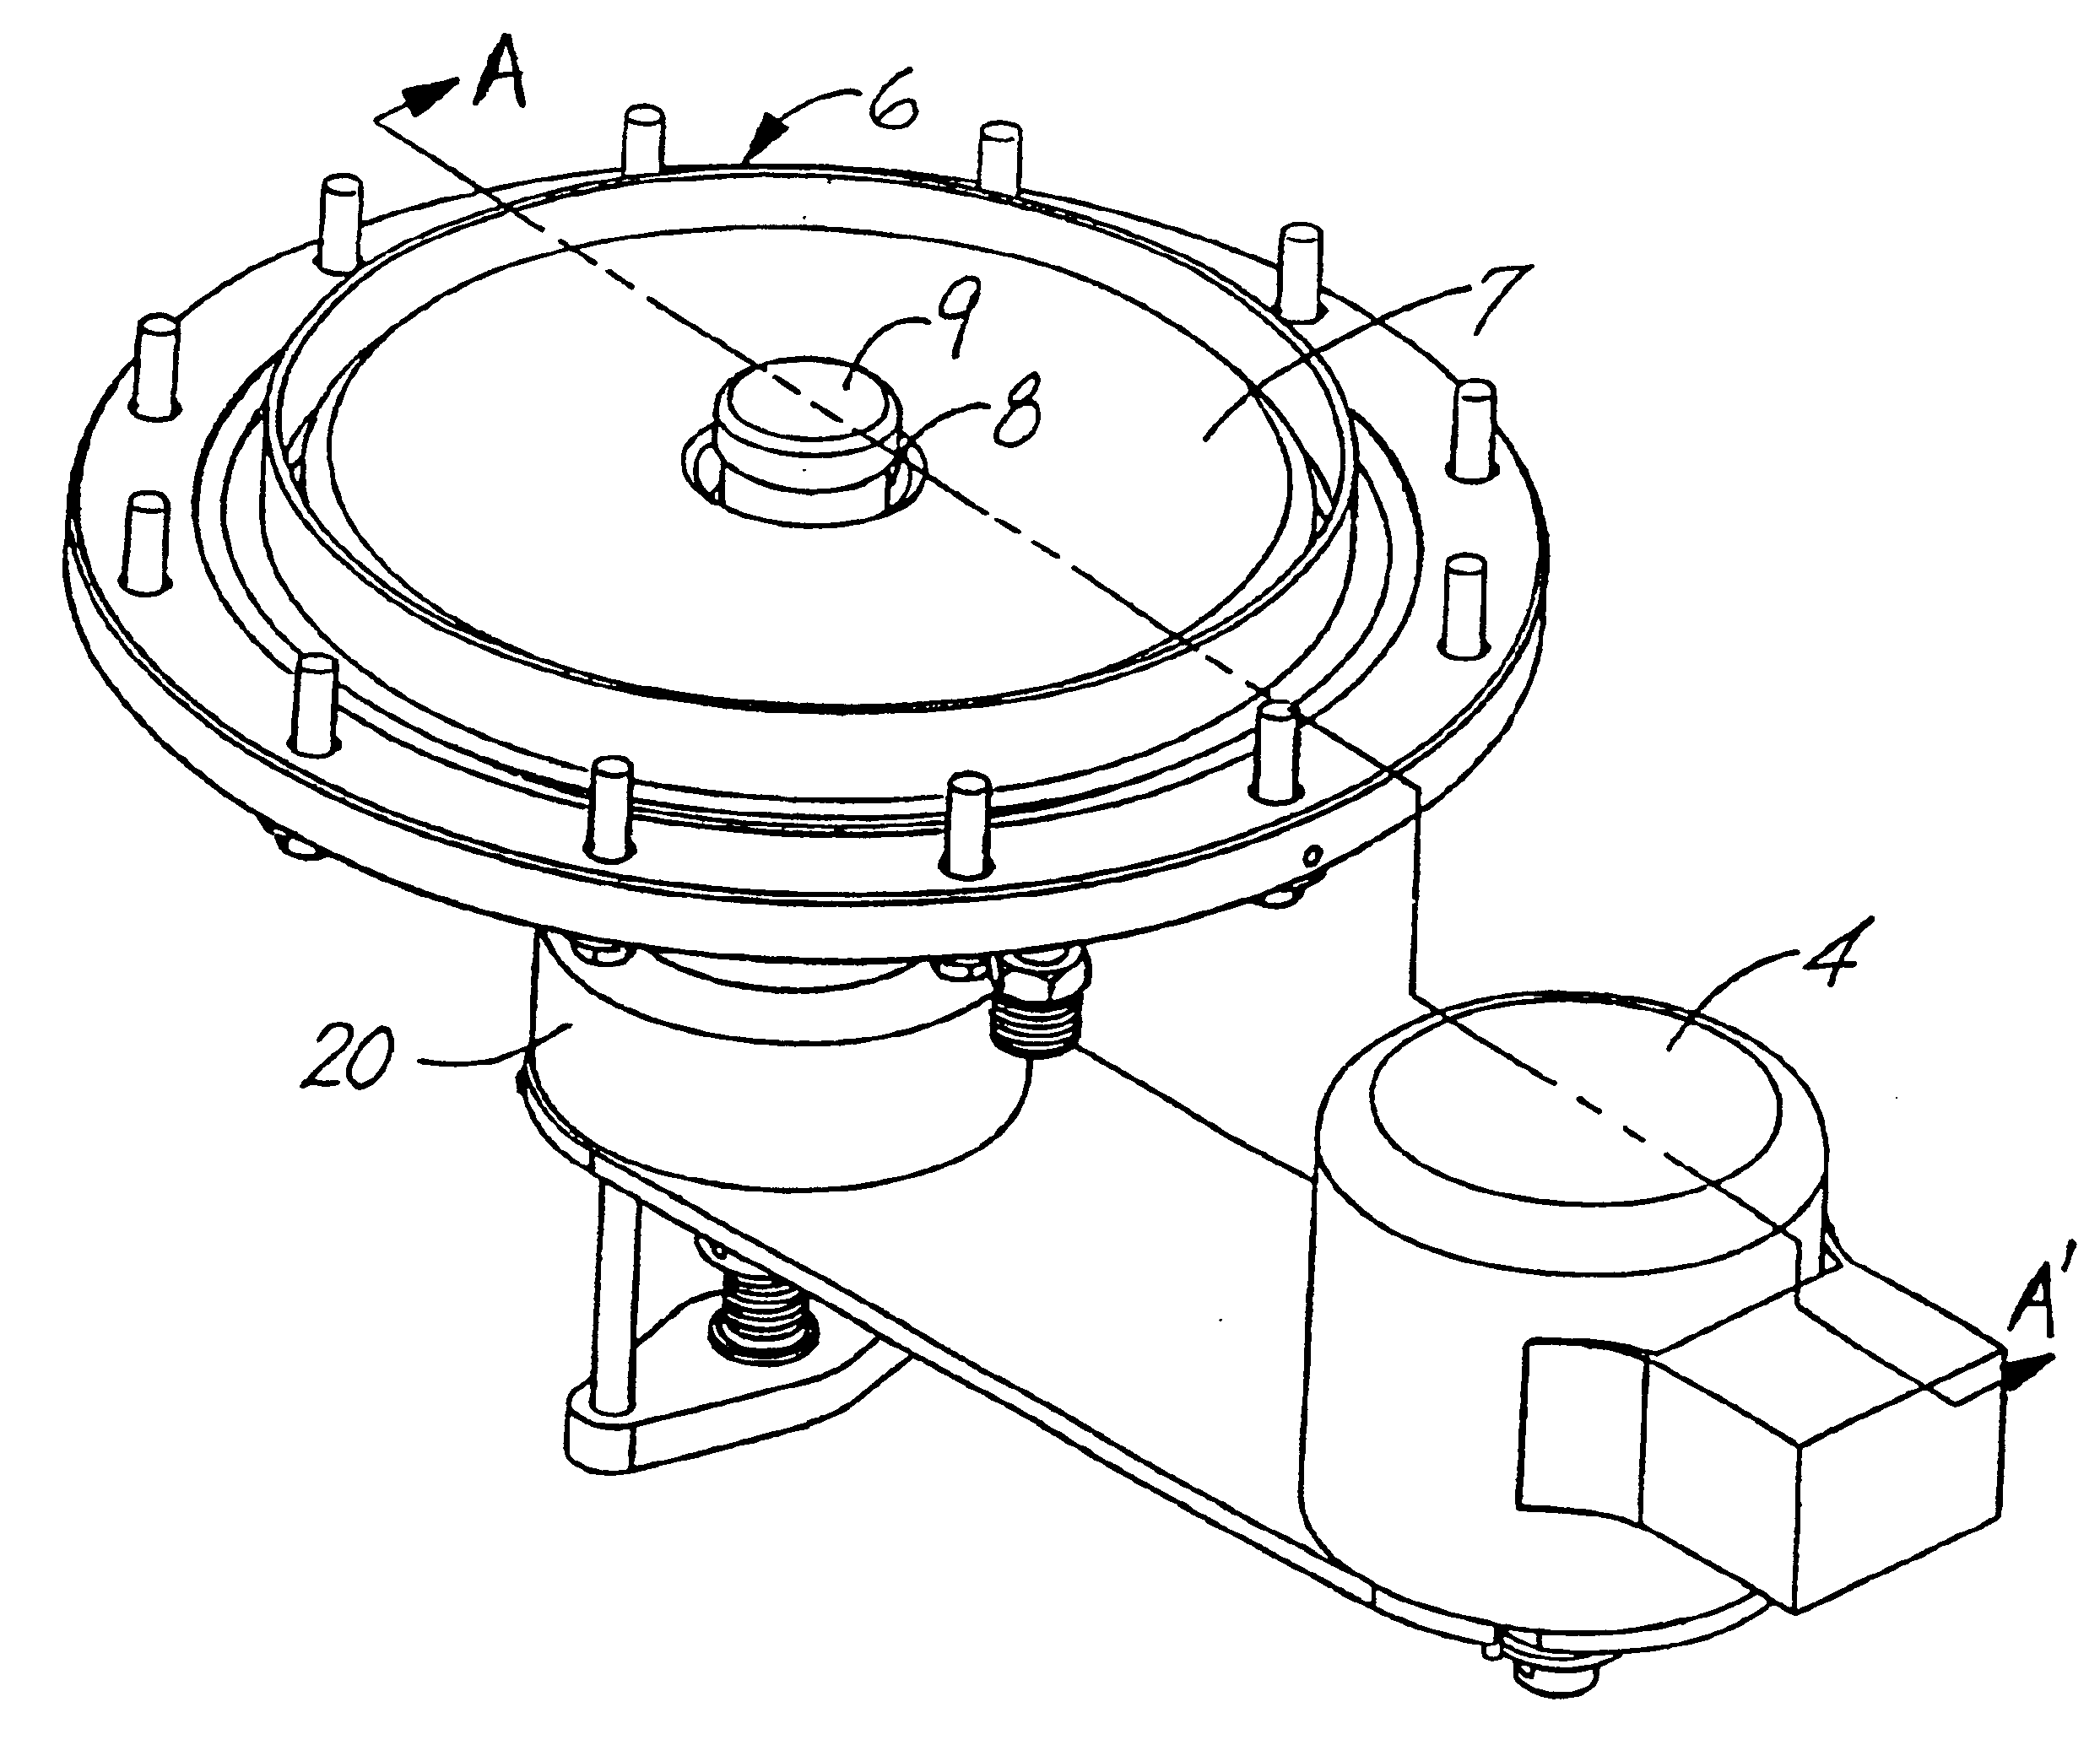 Spinning disk evaporator